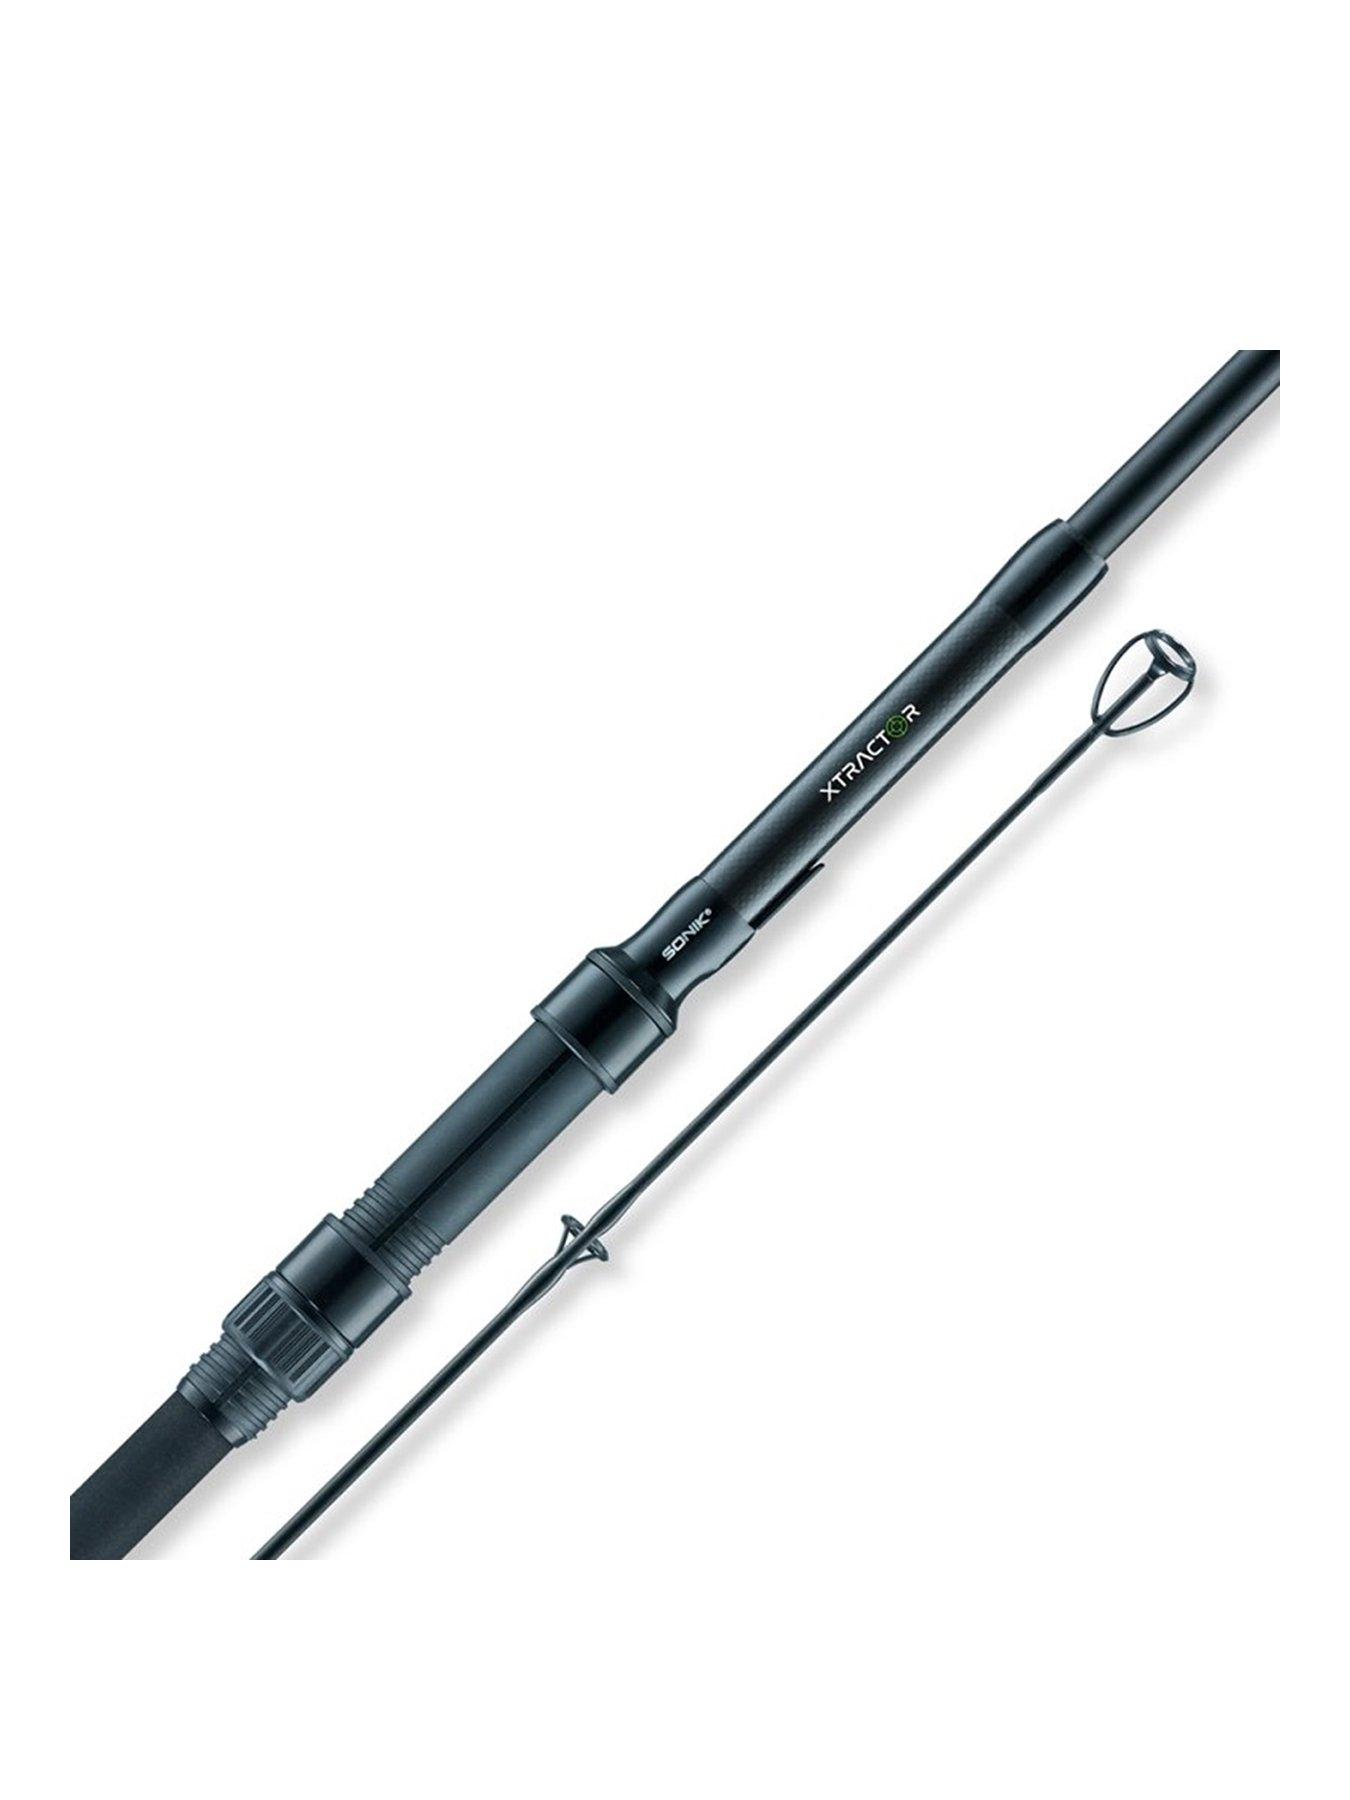 Portable Lightweight Comfortable Grip Fishing Rod Kit Family